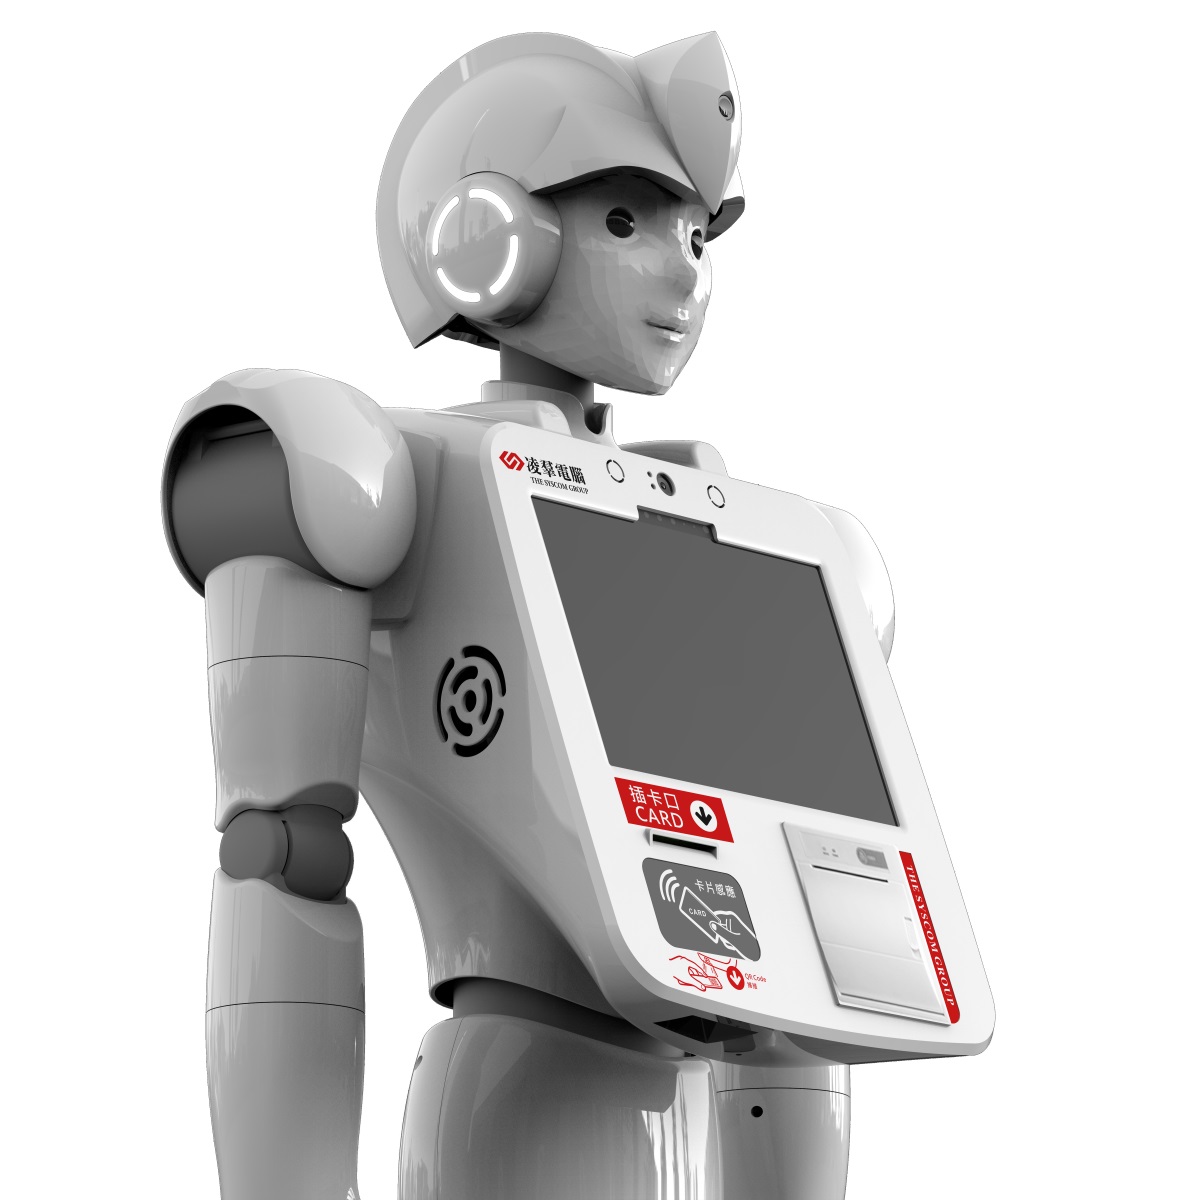 Ayuda - Service Robot  / SYSCOM Computer Engineering Co.